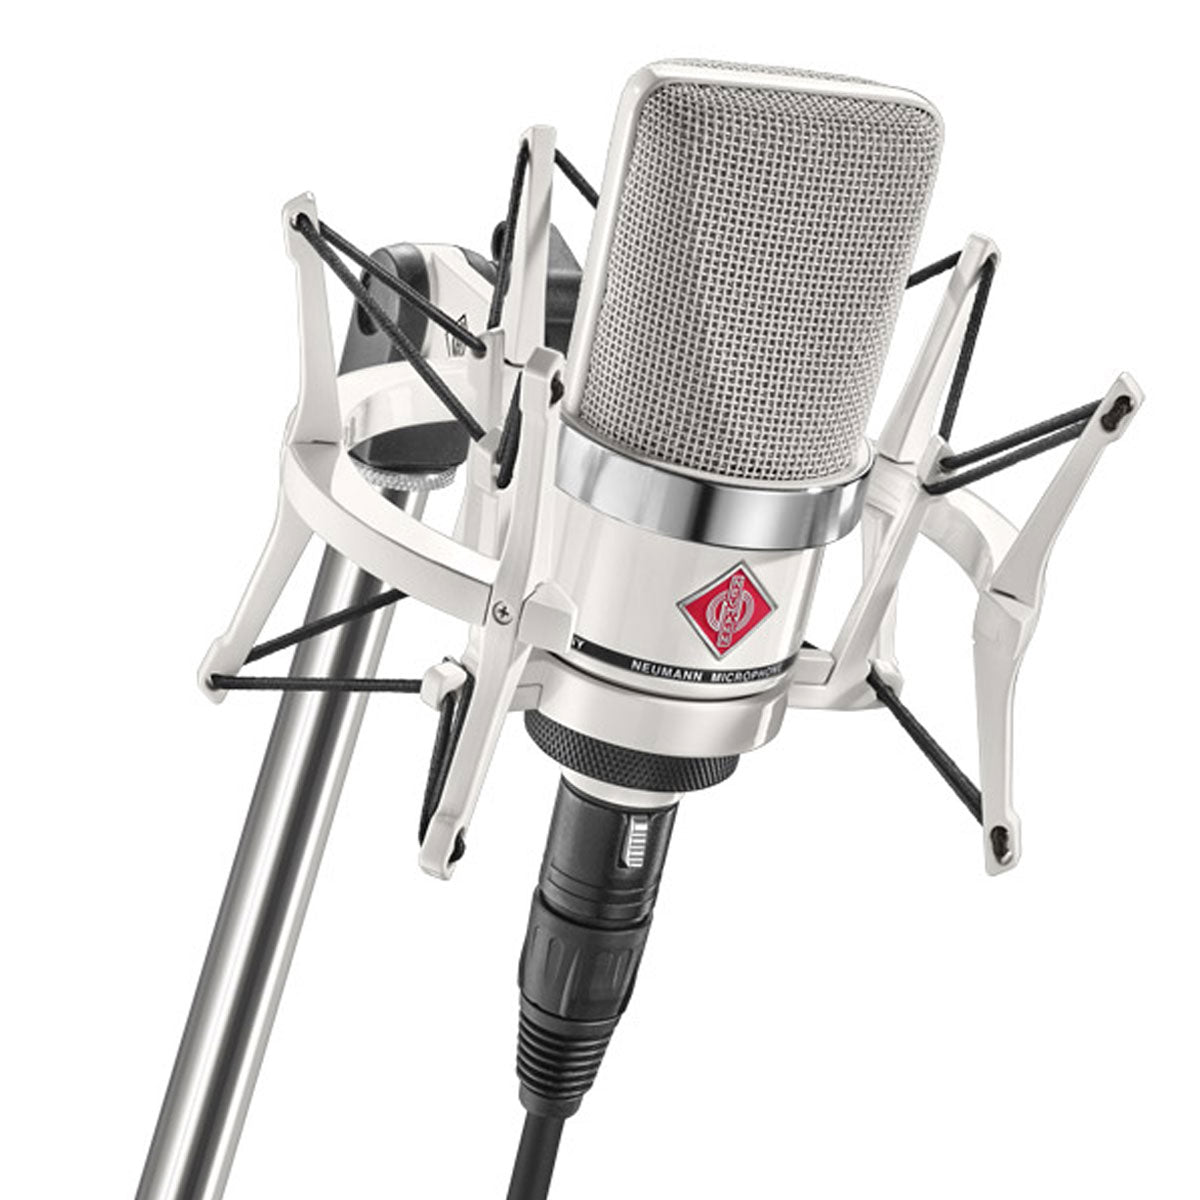 Neumann TLM 102 Studio Set Large Diaphragm Microphone - Limited White Edition